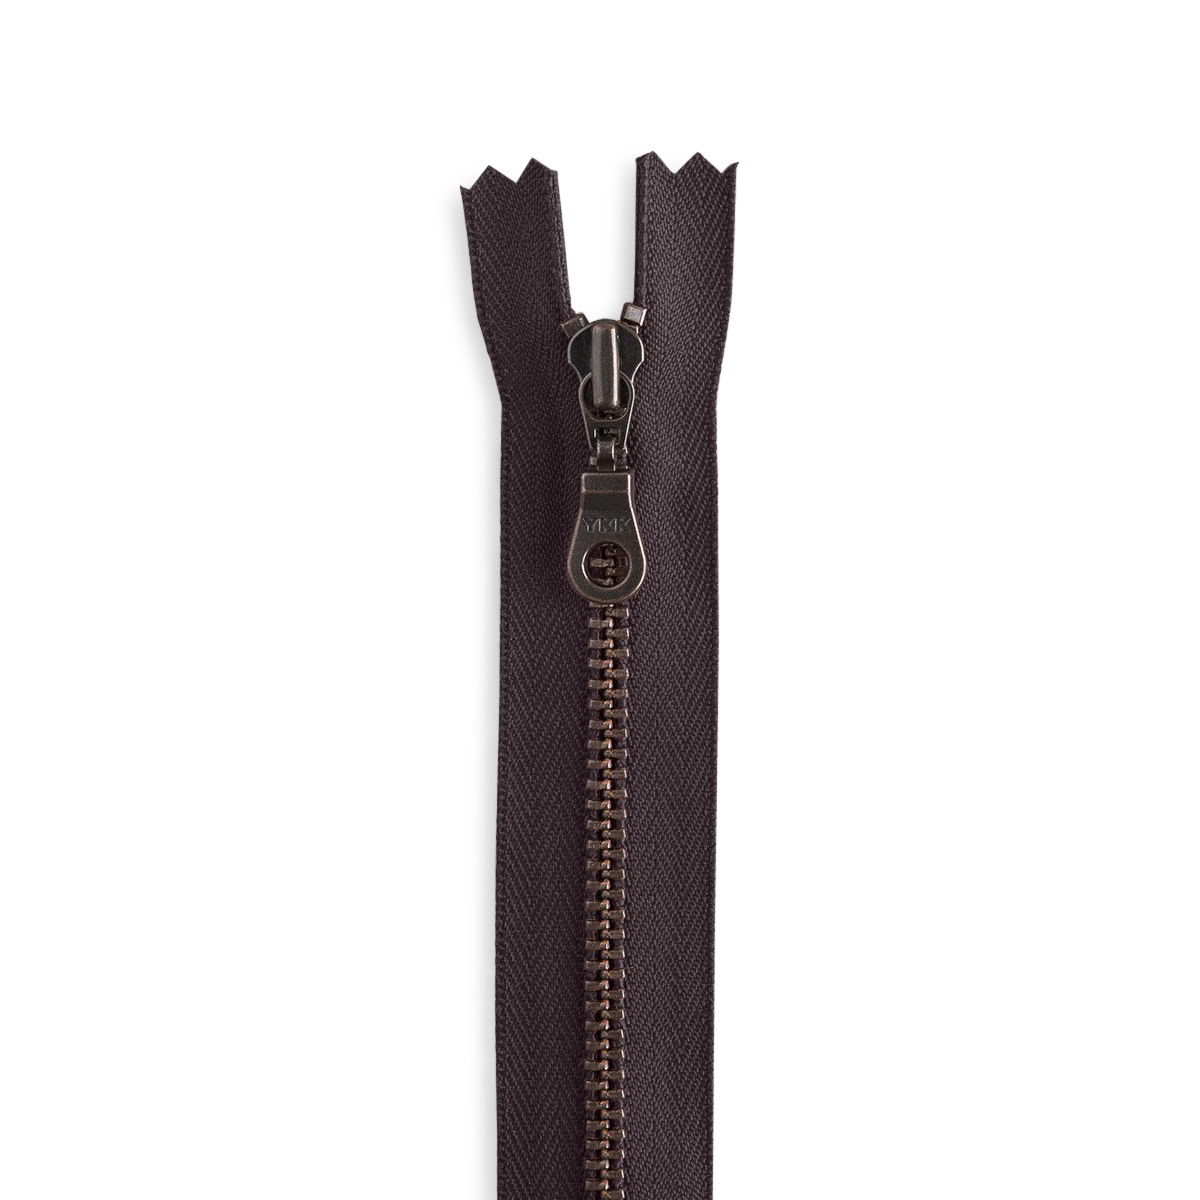 Prym Fashion Zipper Puller Classic Black 